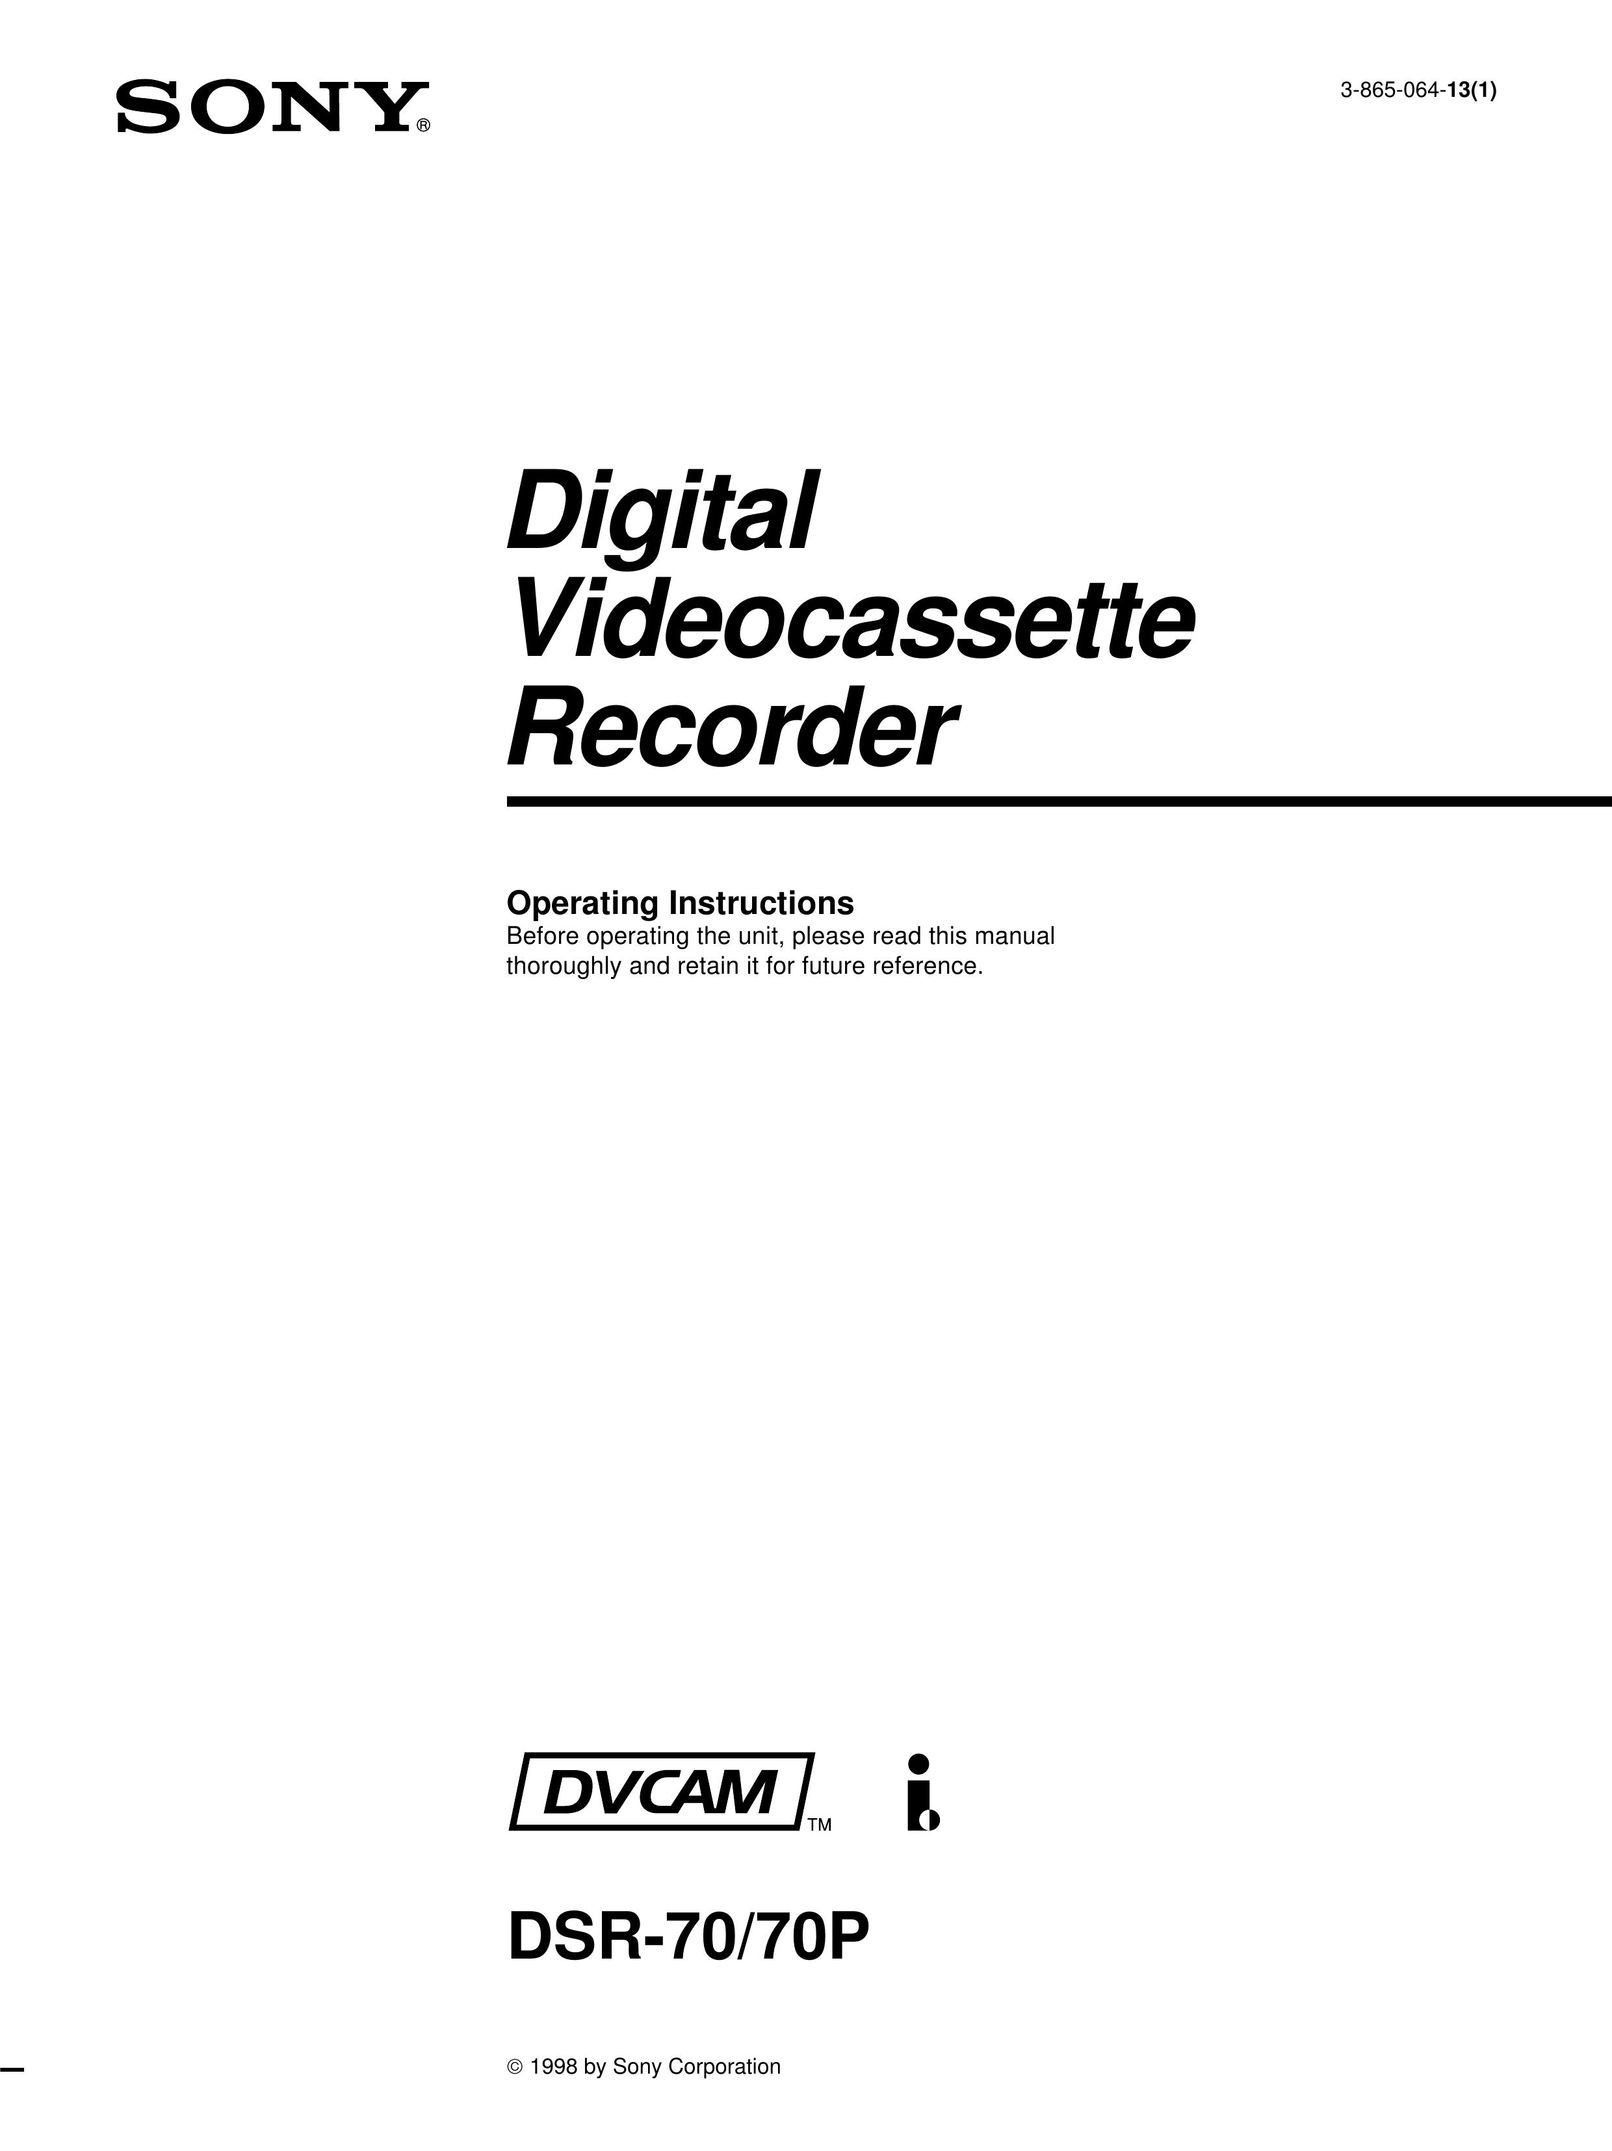 Sony DSR-70 DVD Recorder User Manual